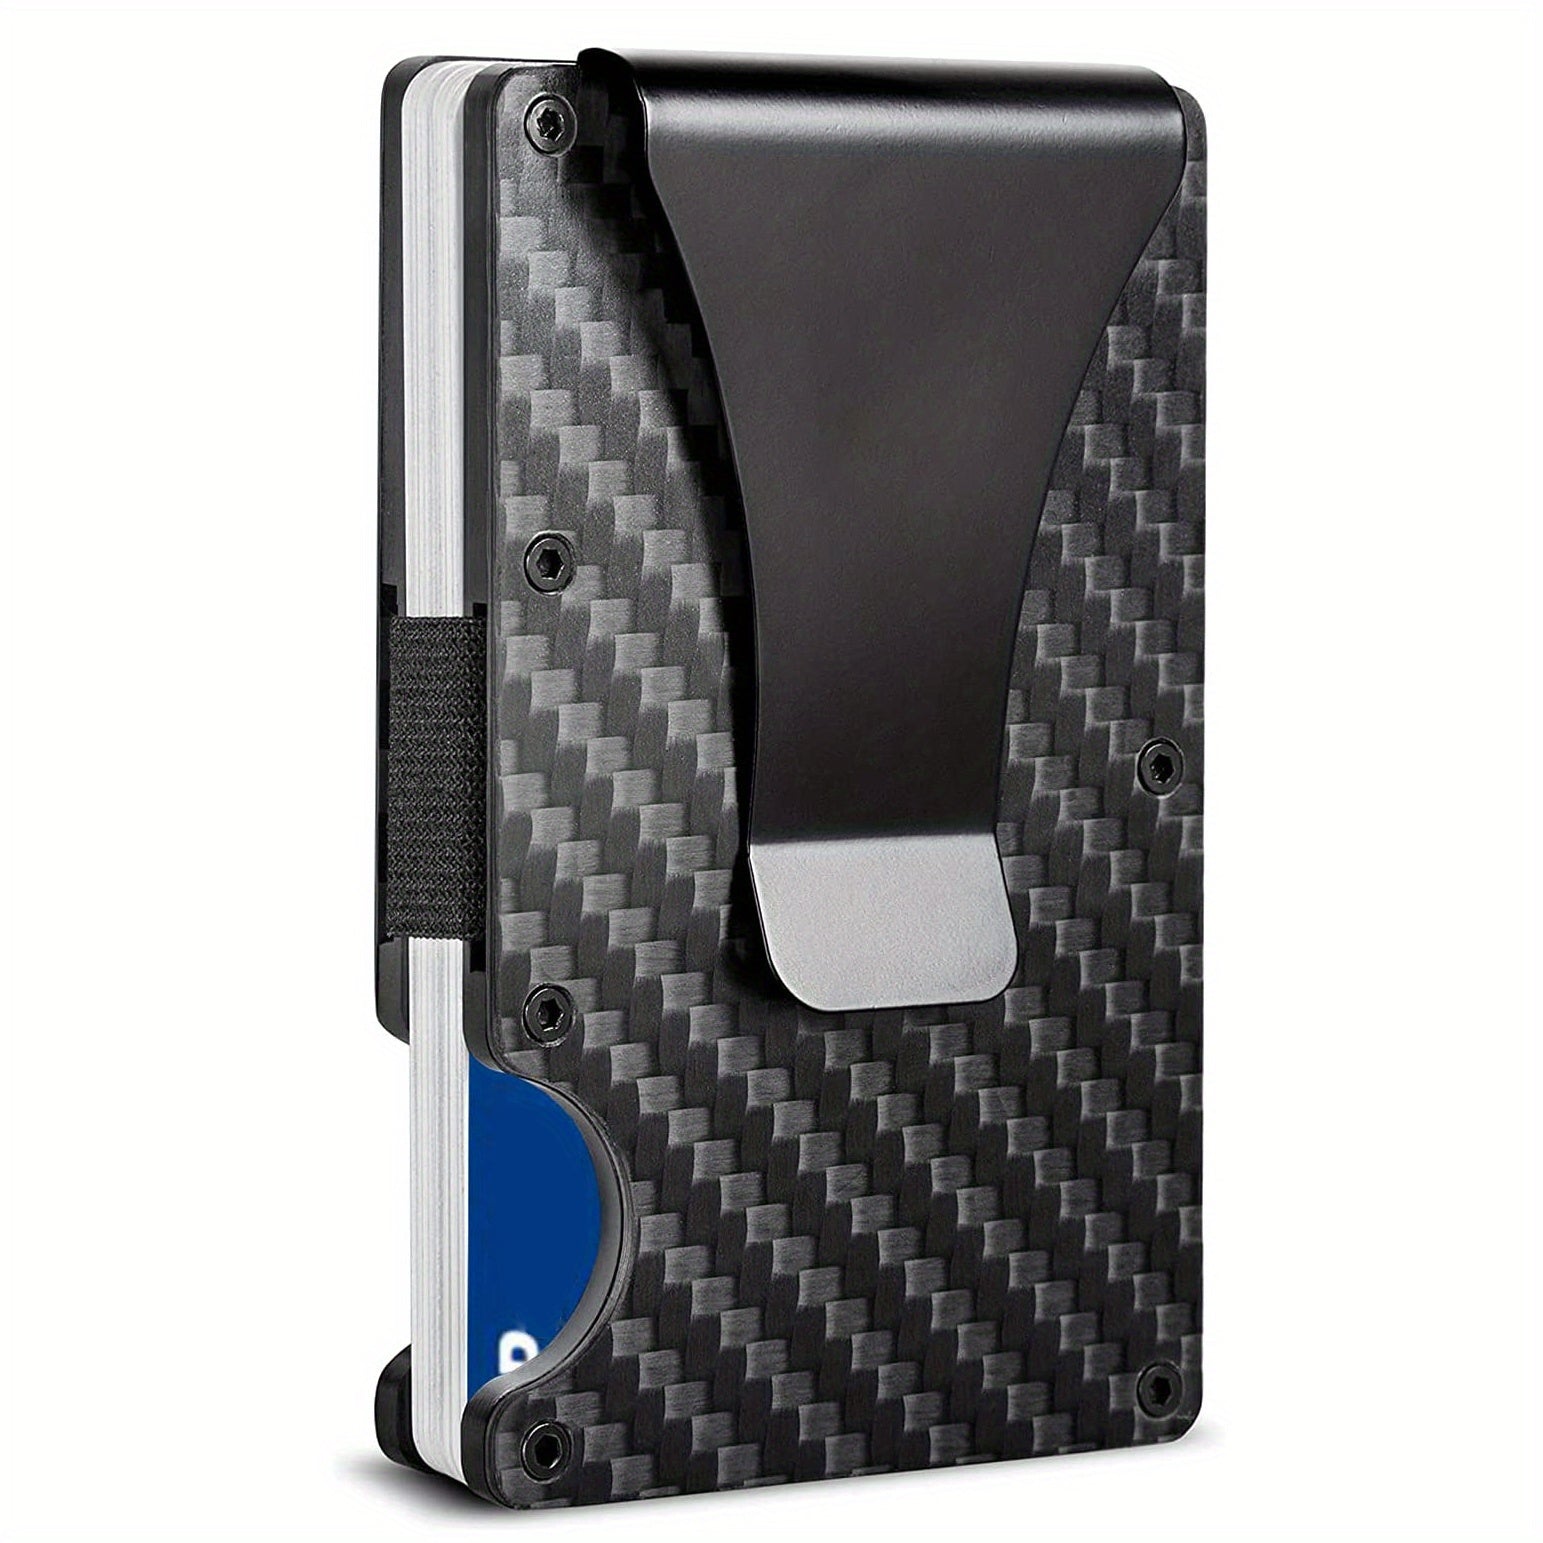 Slim Wallet For Men - Front Pocket RFID Blocking Minimalist Wallet For Men - Metal Wallet With Money Clip